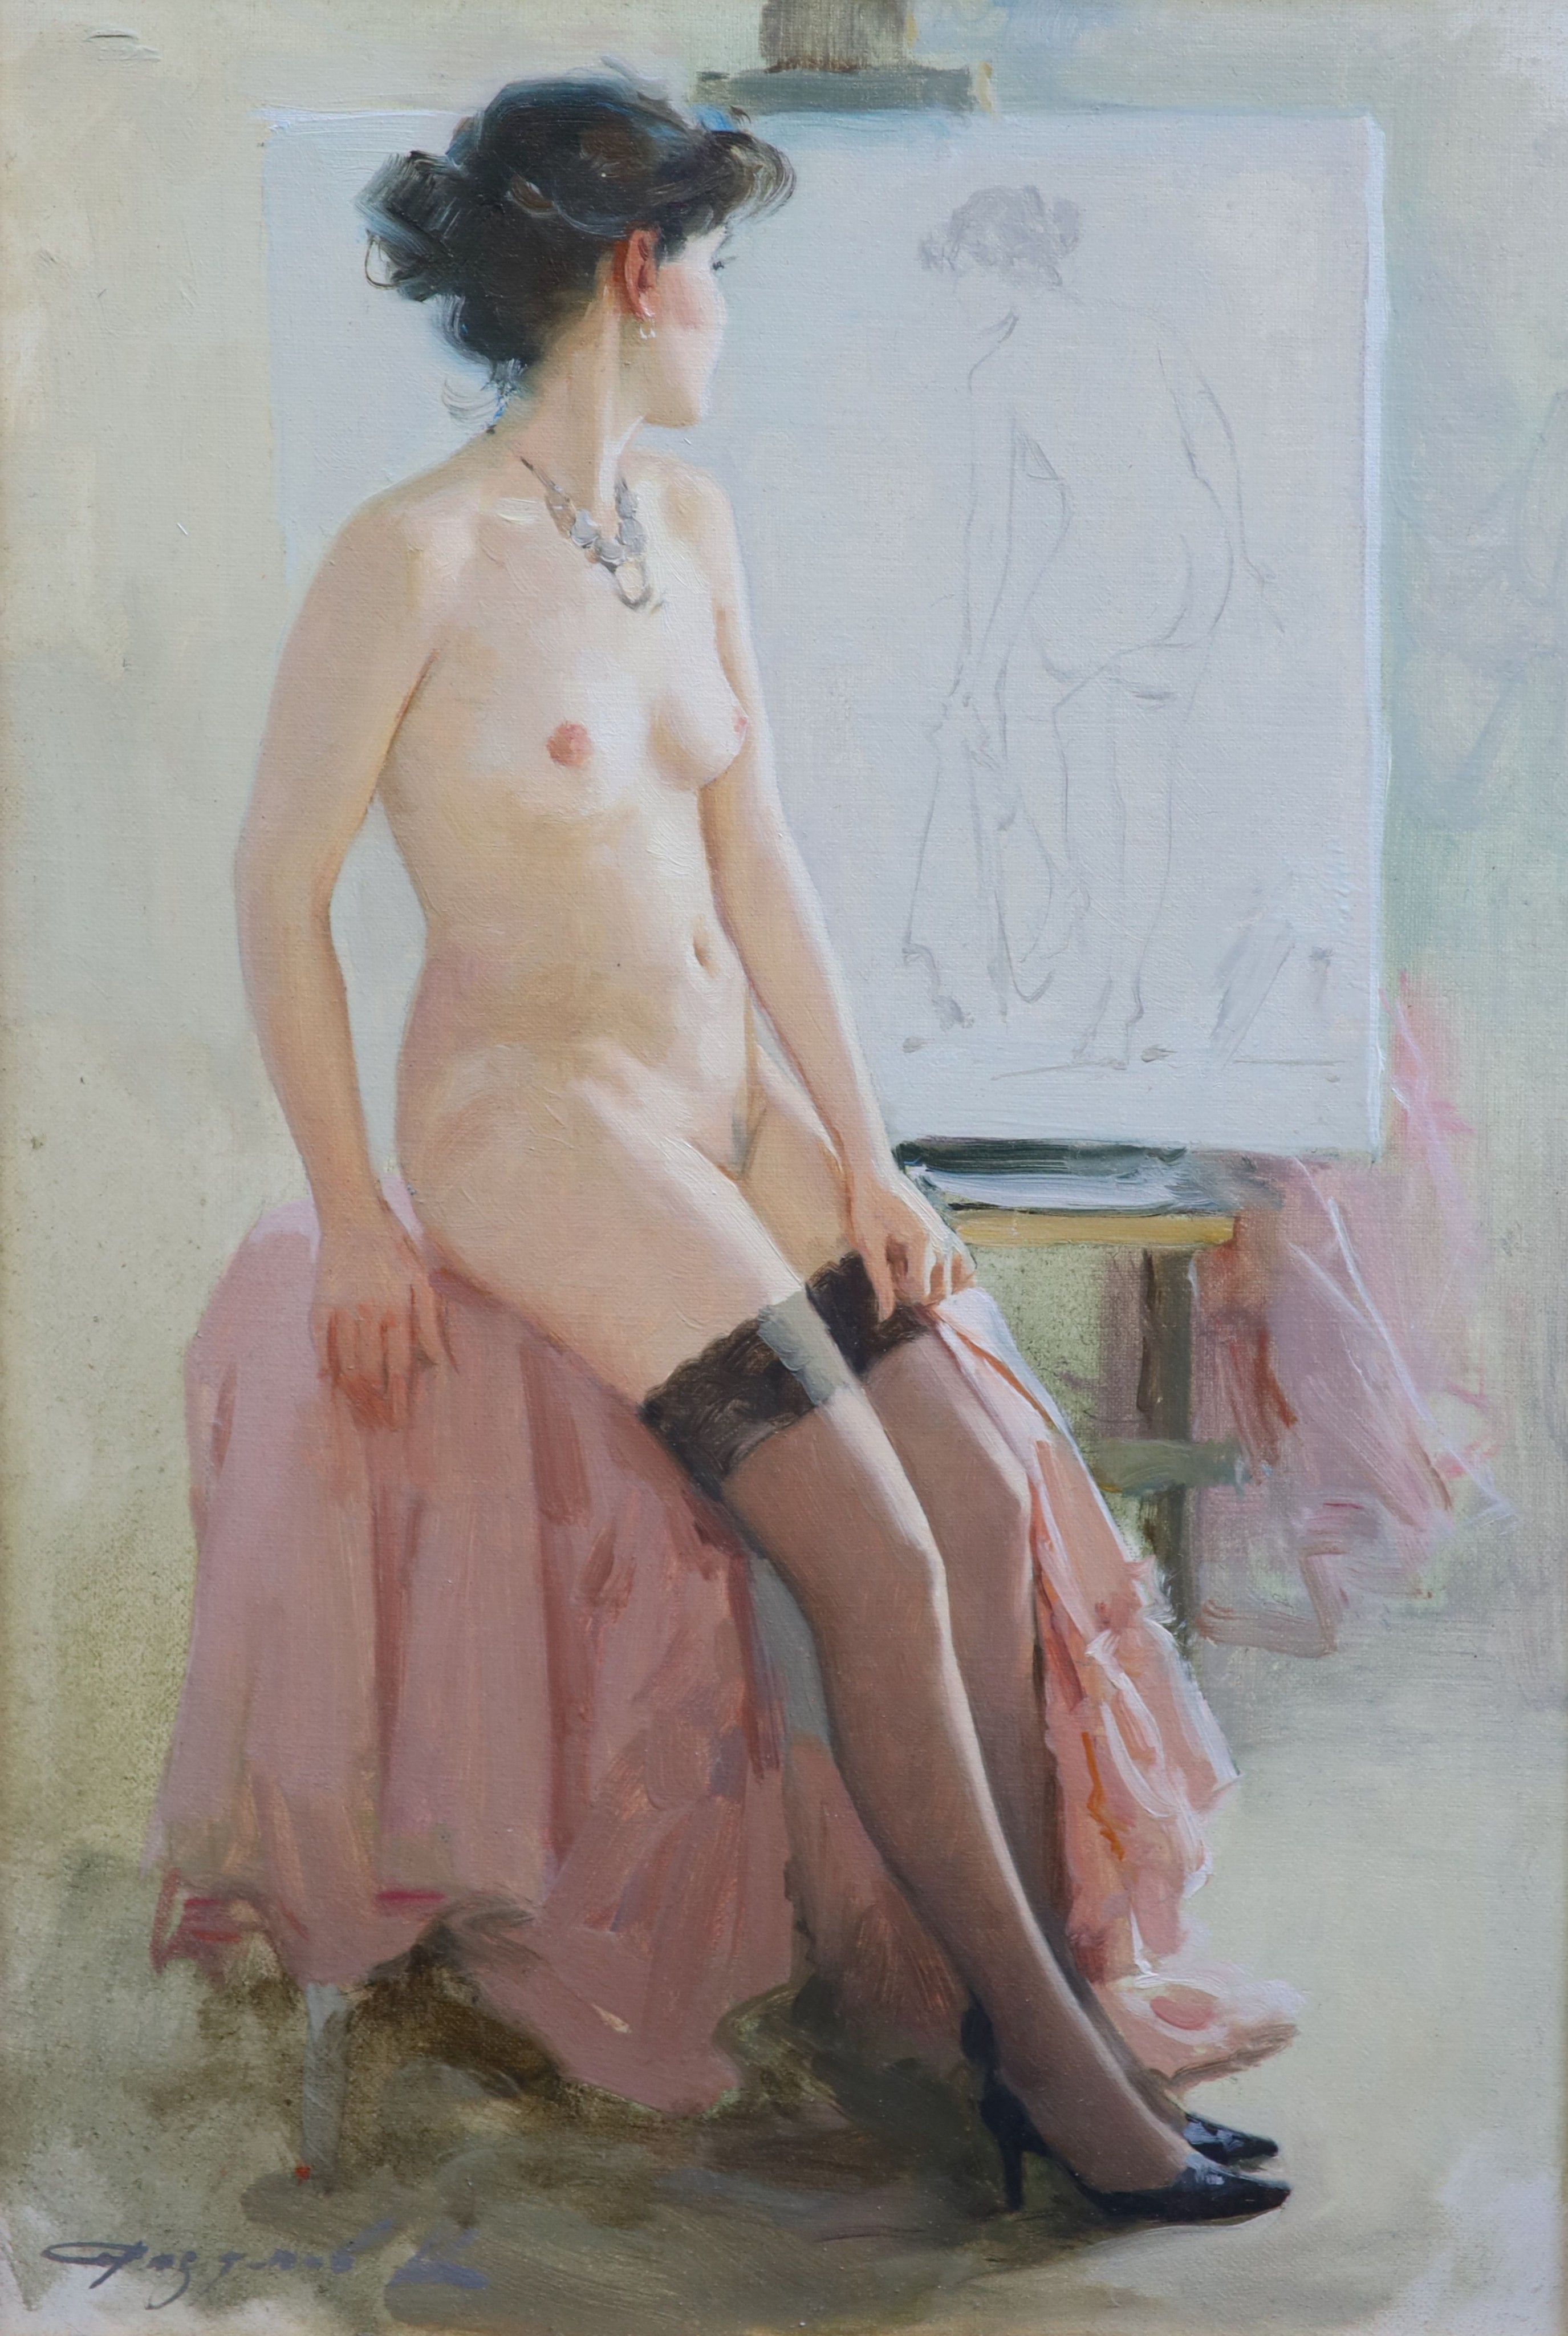 Konstantin Razumov (b.1974), The Artist’s Model, Oil on canvas, 34 x 23cm.